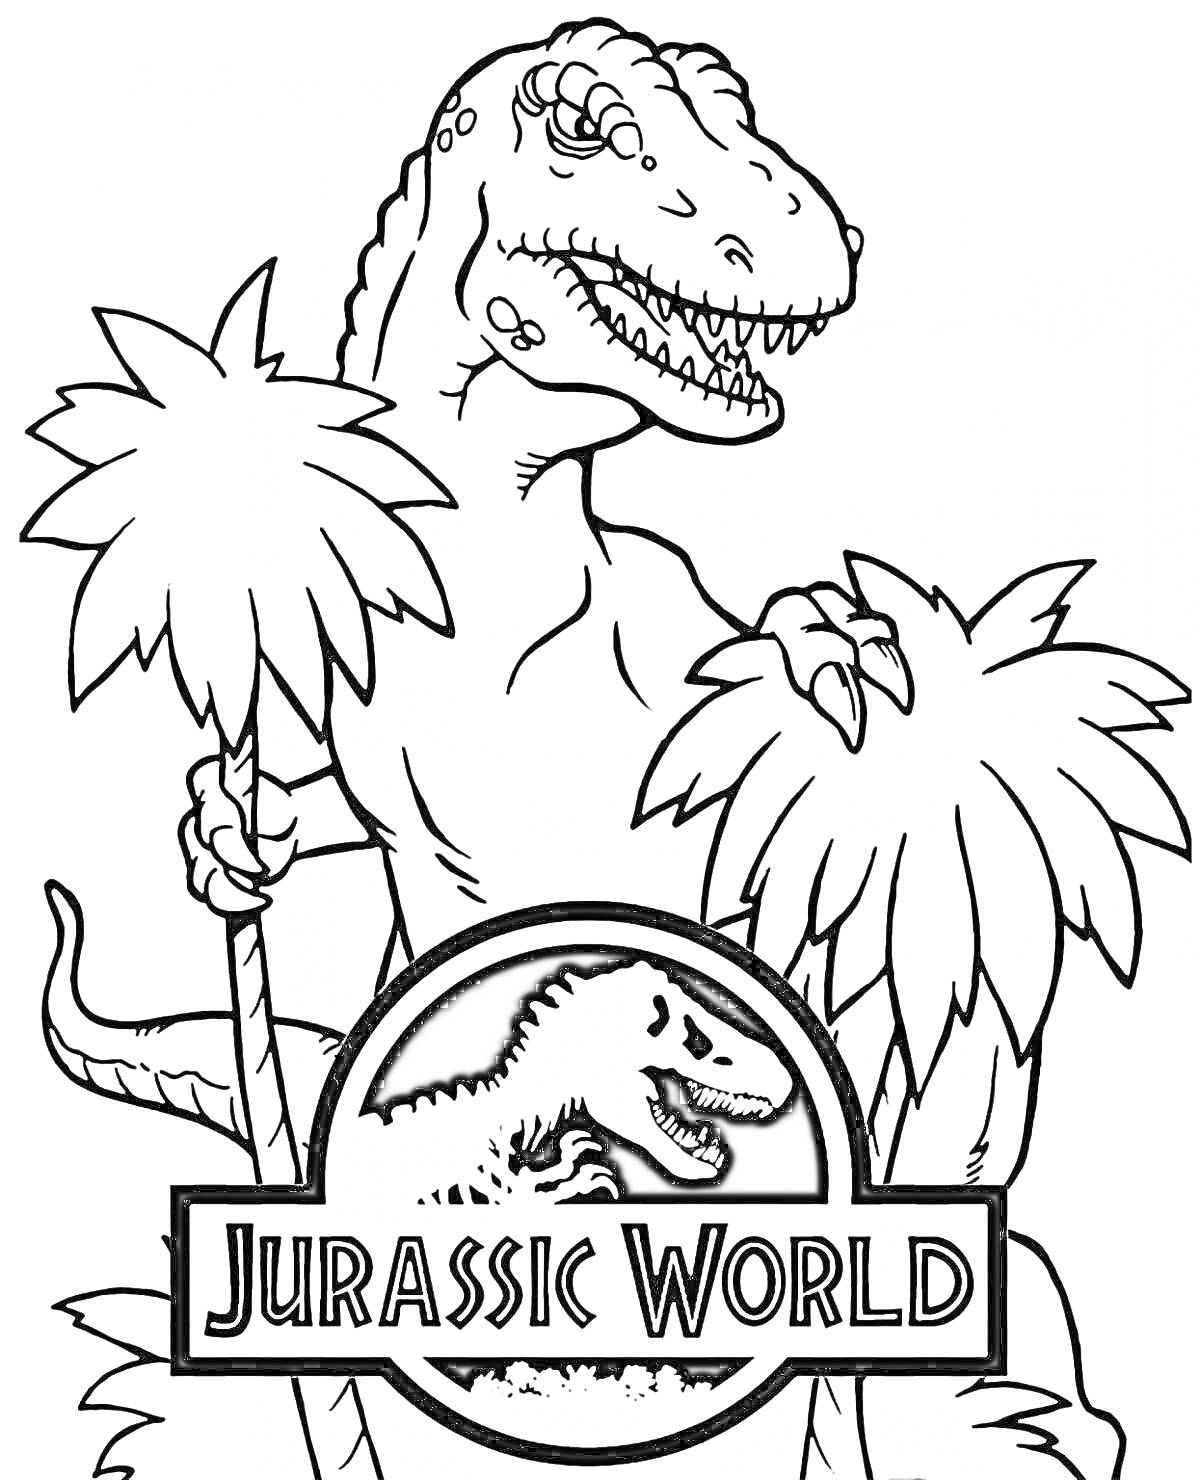 Динозавр среди пальм и логотипом «Jurassic World»